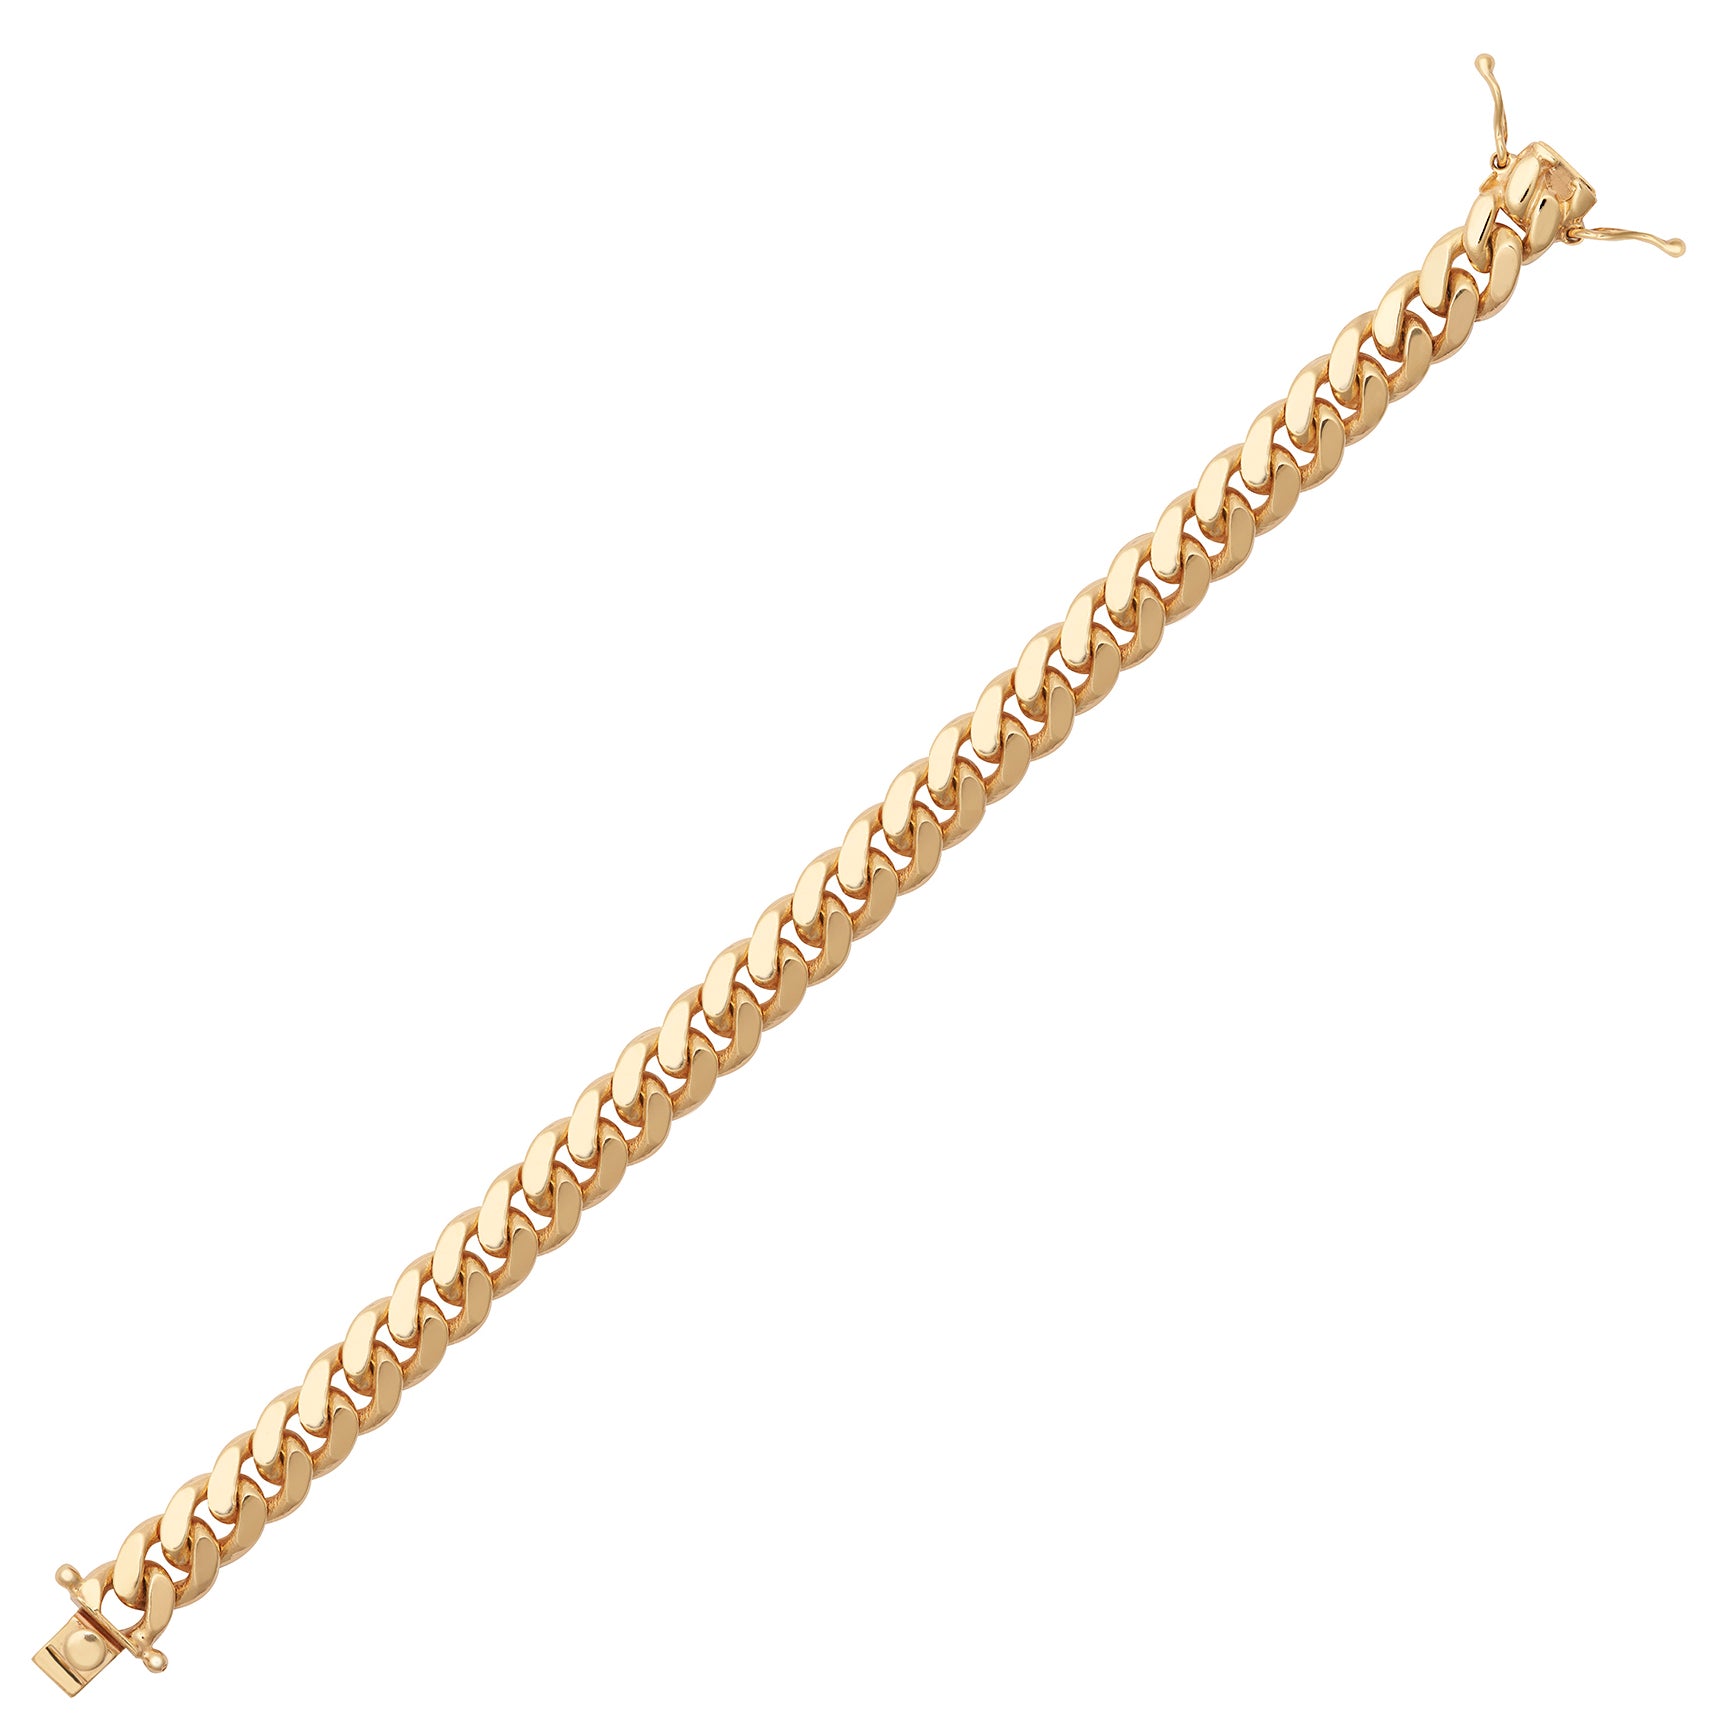 9ct Gold  Domed Cuban Curb 10.5mm Chain Link Bracelet, 9 inch 23cm - JCN090B